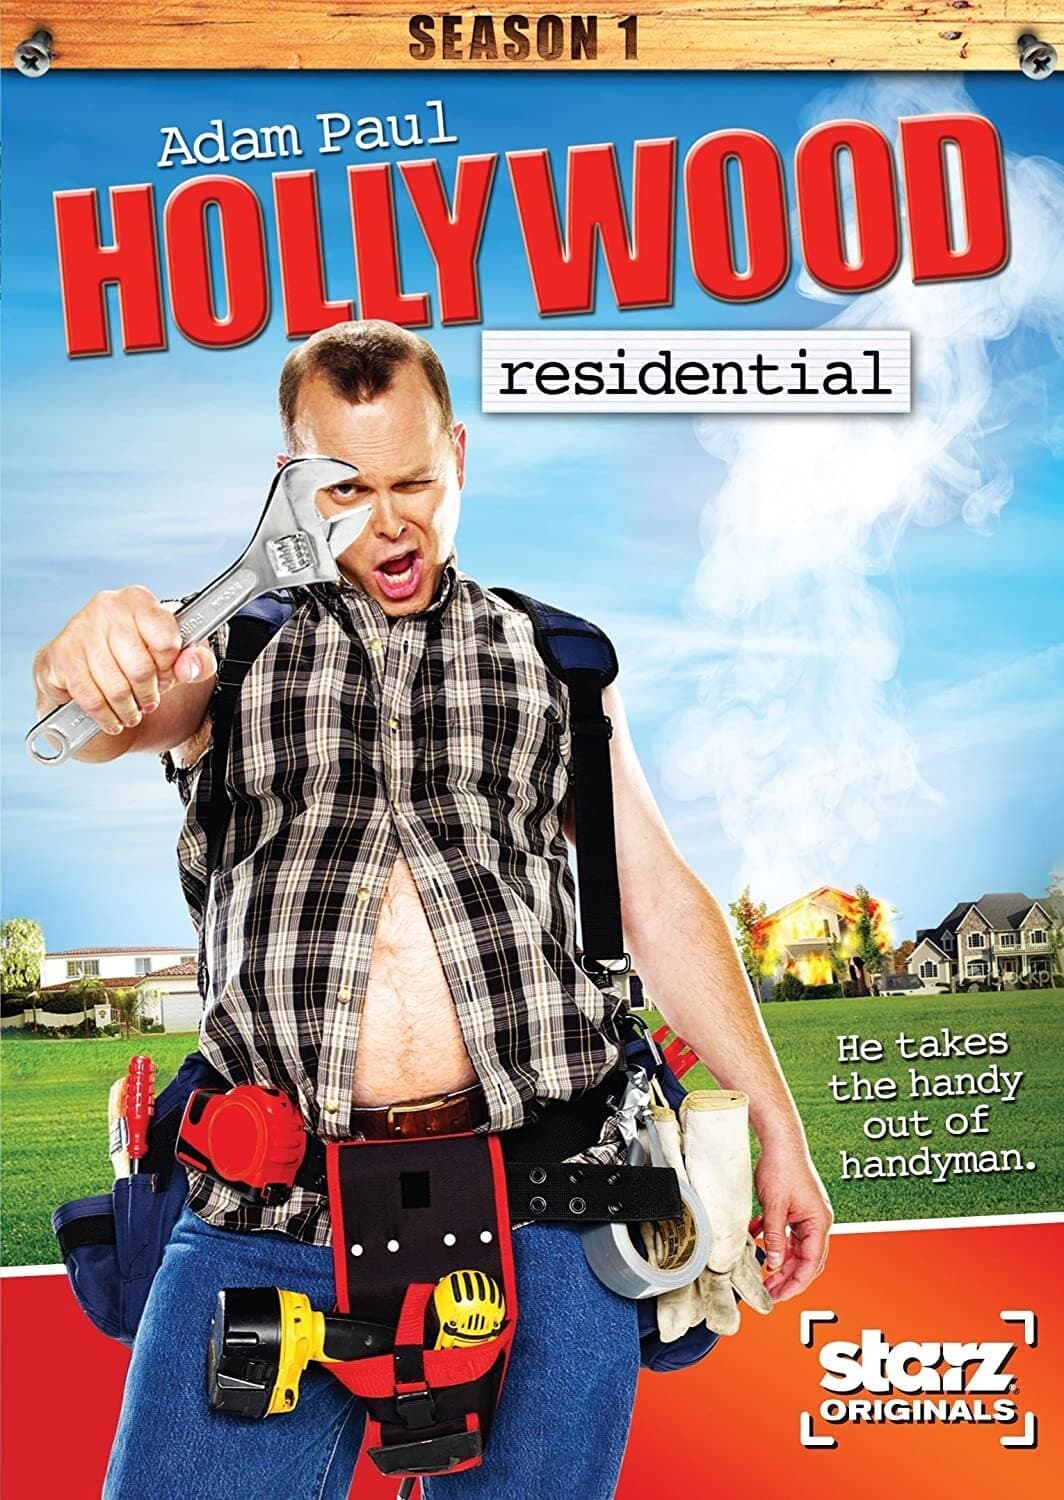 Hollywood Residential (2008)